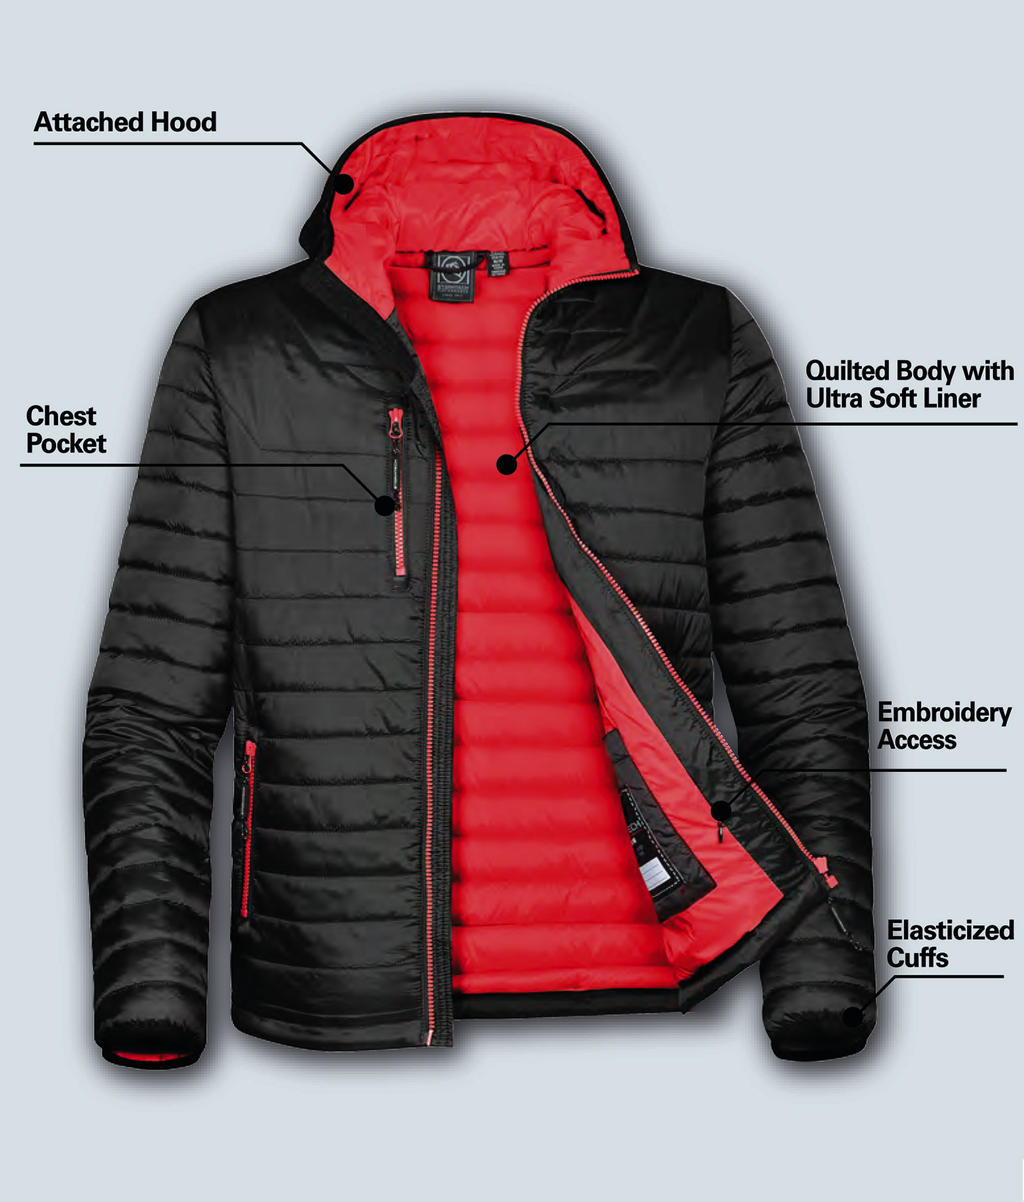  Gravity Thermal Jacket in Farbe Black/True Red